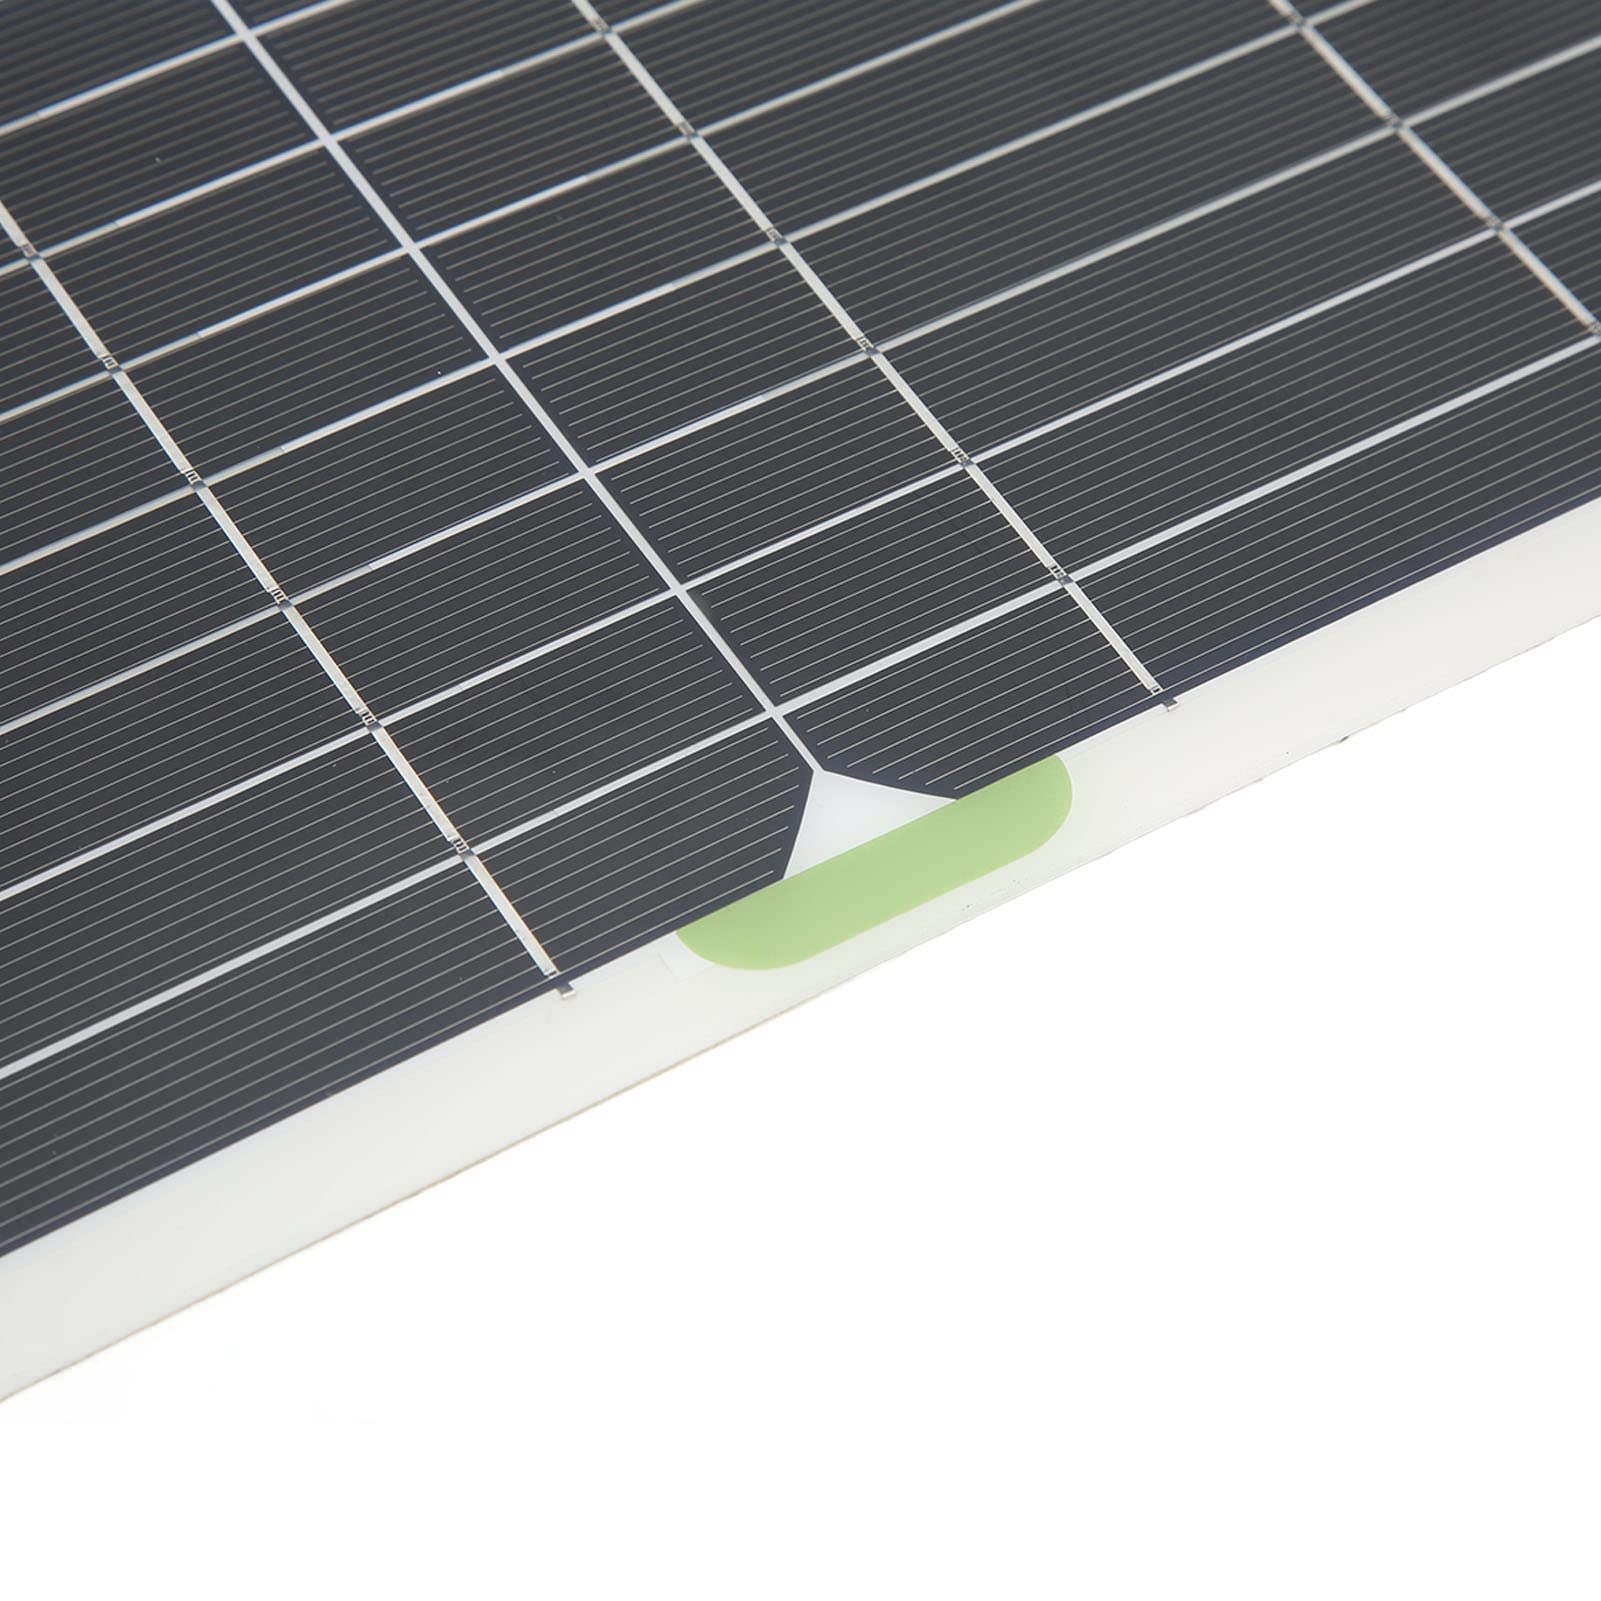 Portable Solar Panel Kit - 200W 12V Monocrystalline Solar Panel Kit, IP65 Waterproof Solar Battery with Battery Clip, Cigarette Lighter Wire, 10 in 1 USB Harness